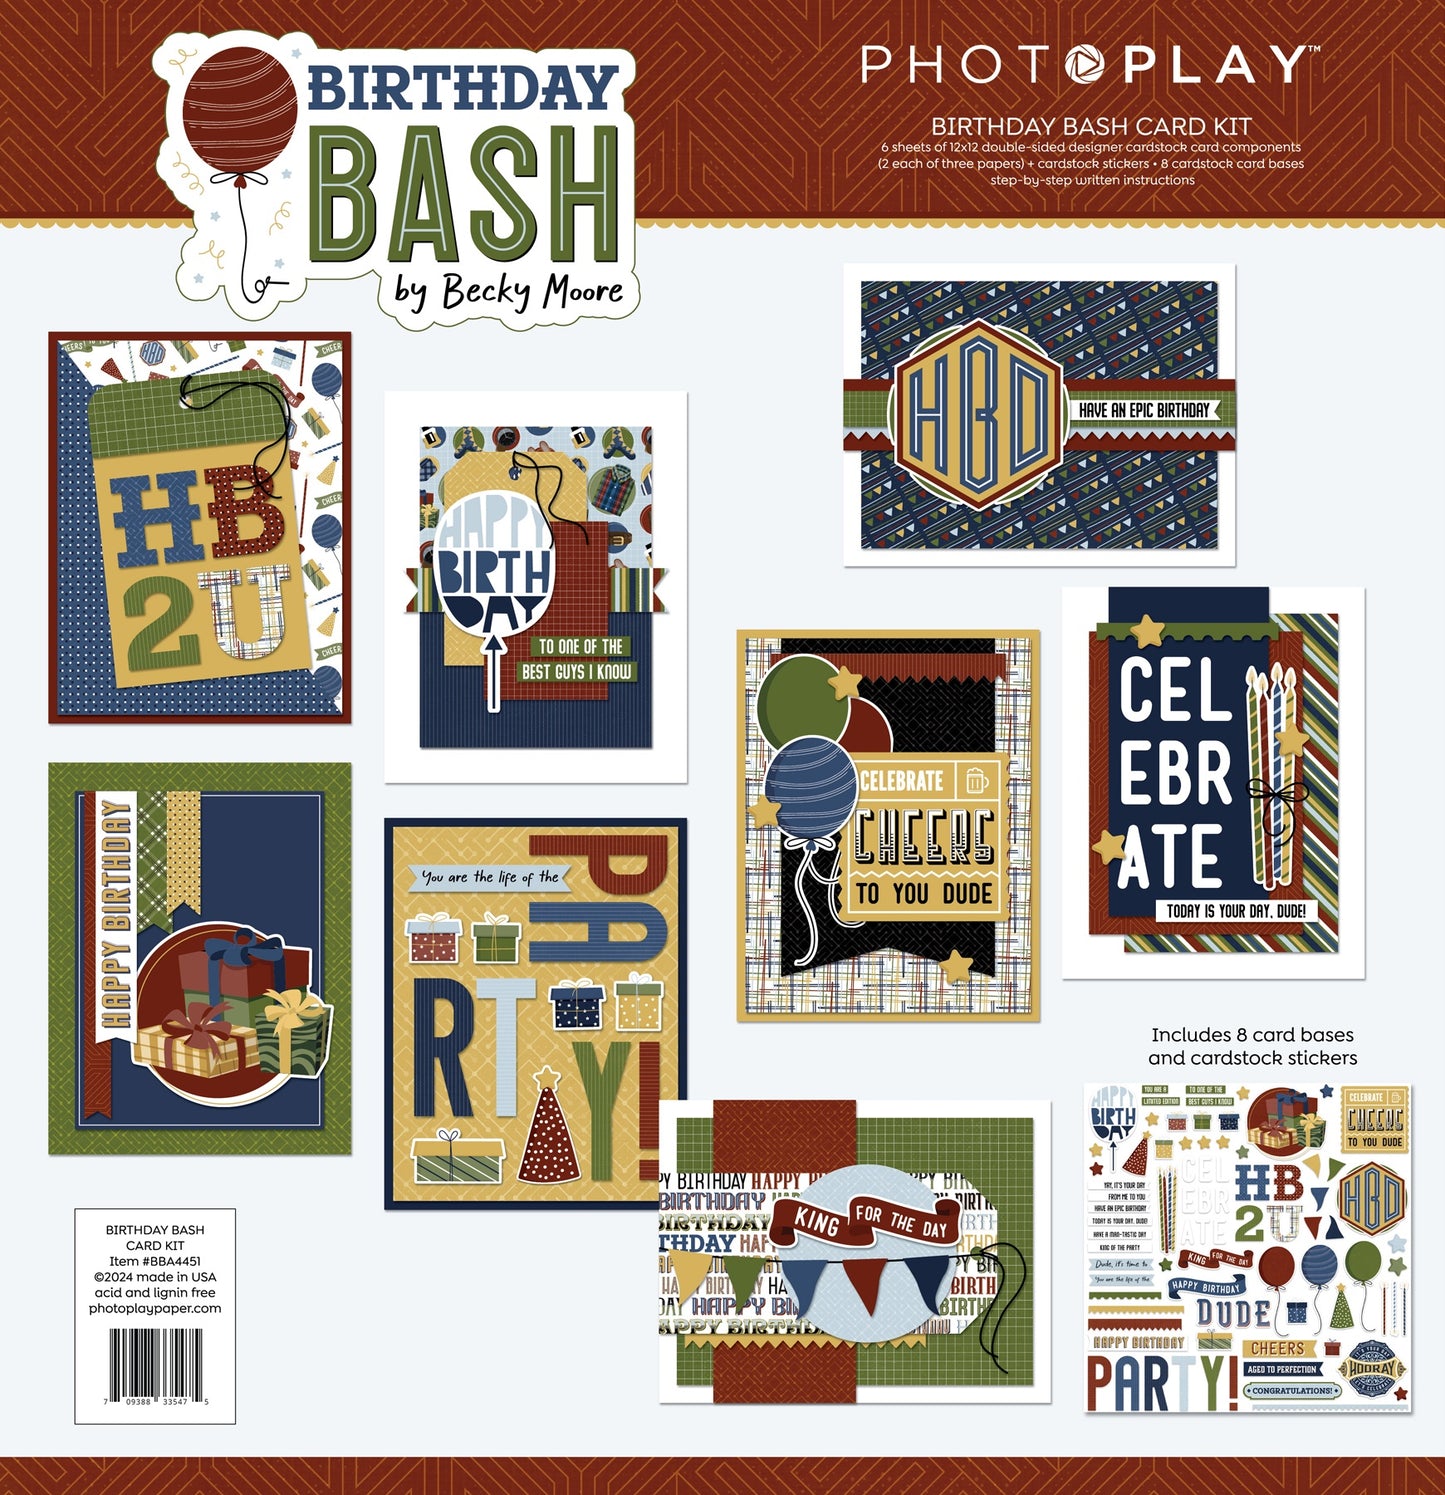 PhotoPlay Birthday Bash Card Kit